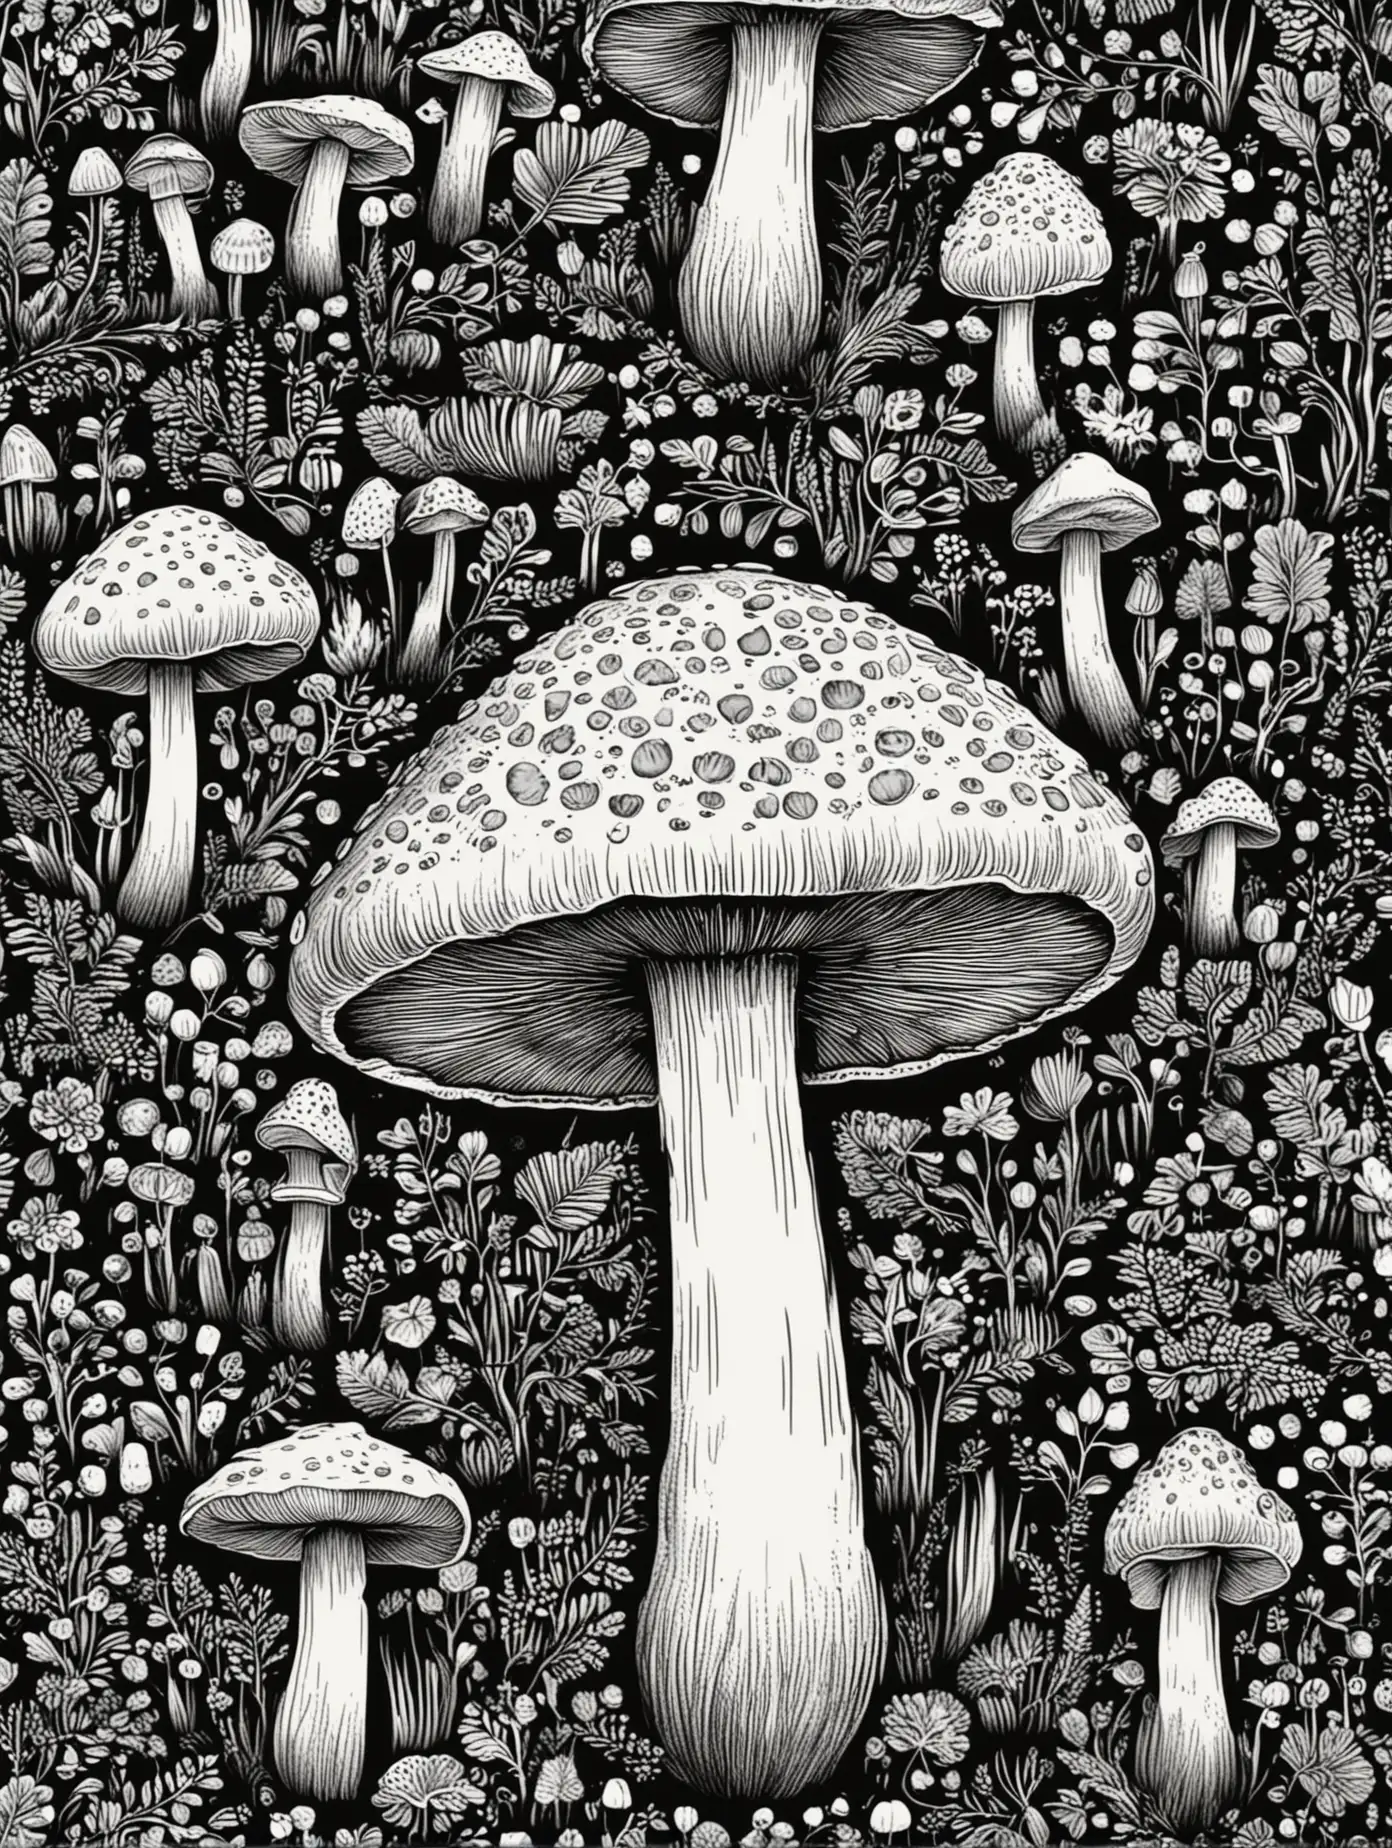 Classic Black and White Mushroom Pattern Illustration